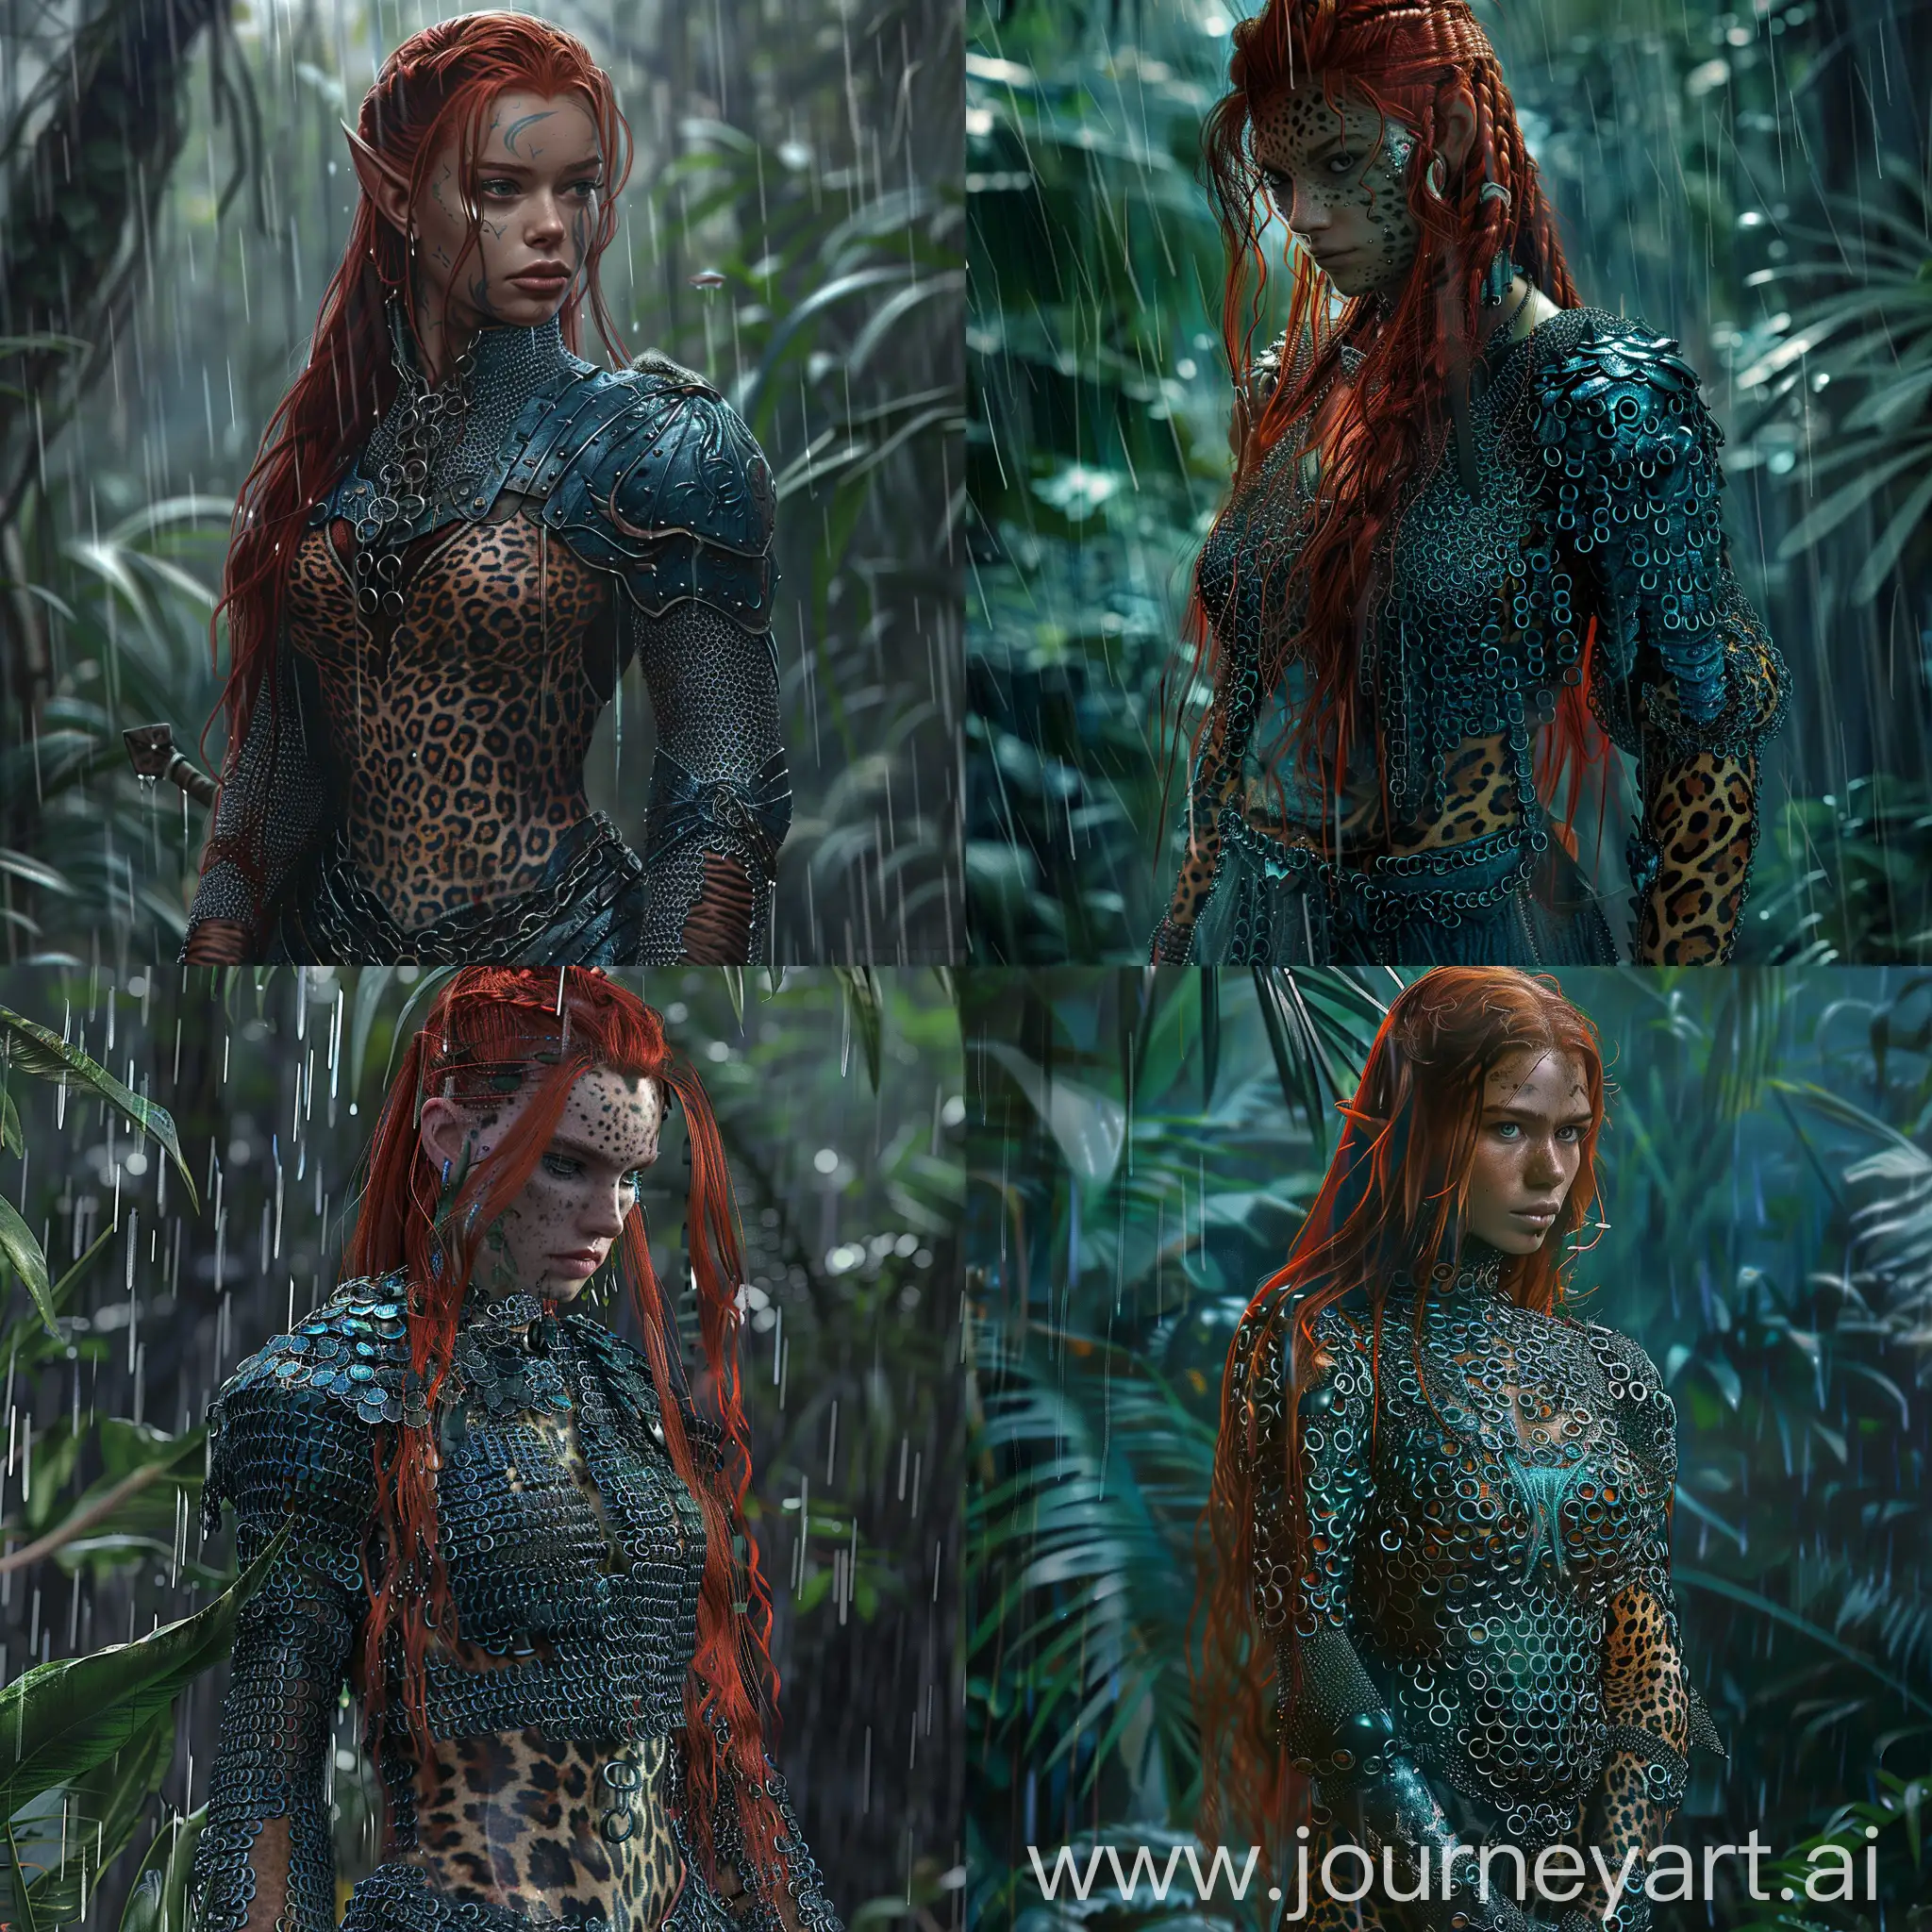 RedHaired-Female-Warrior-in-Cobalt-Leopard-Armor-amid-Rainforest-Adventure